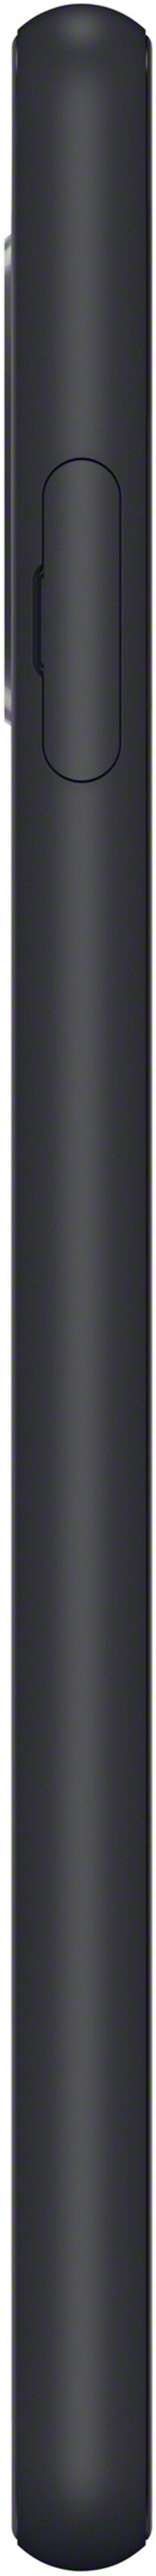 Sony XPERIA 10 III 128GB Dobbelt-SIM Svart